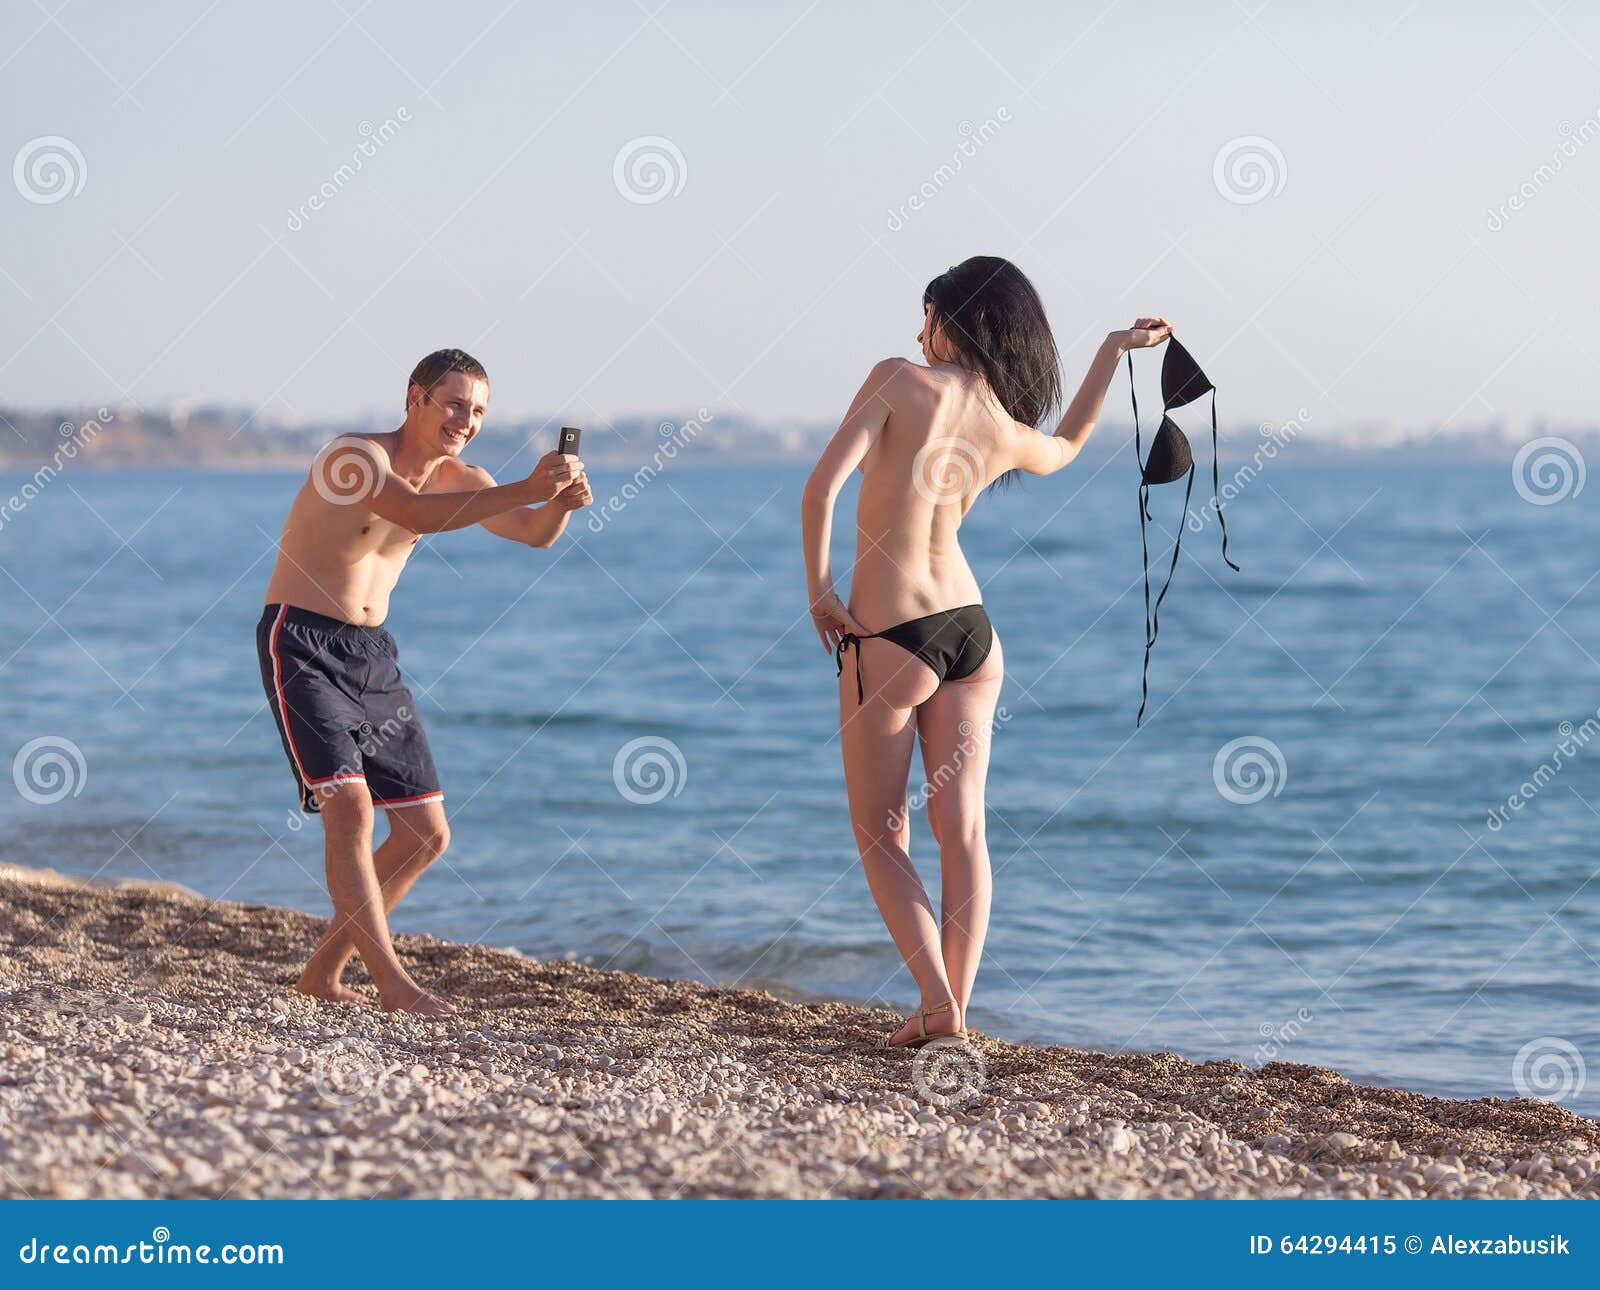 david shugart recommends girlfriend topless on beach pic